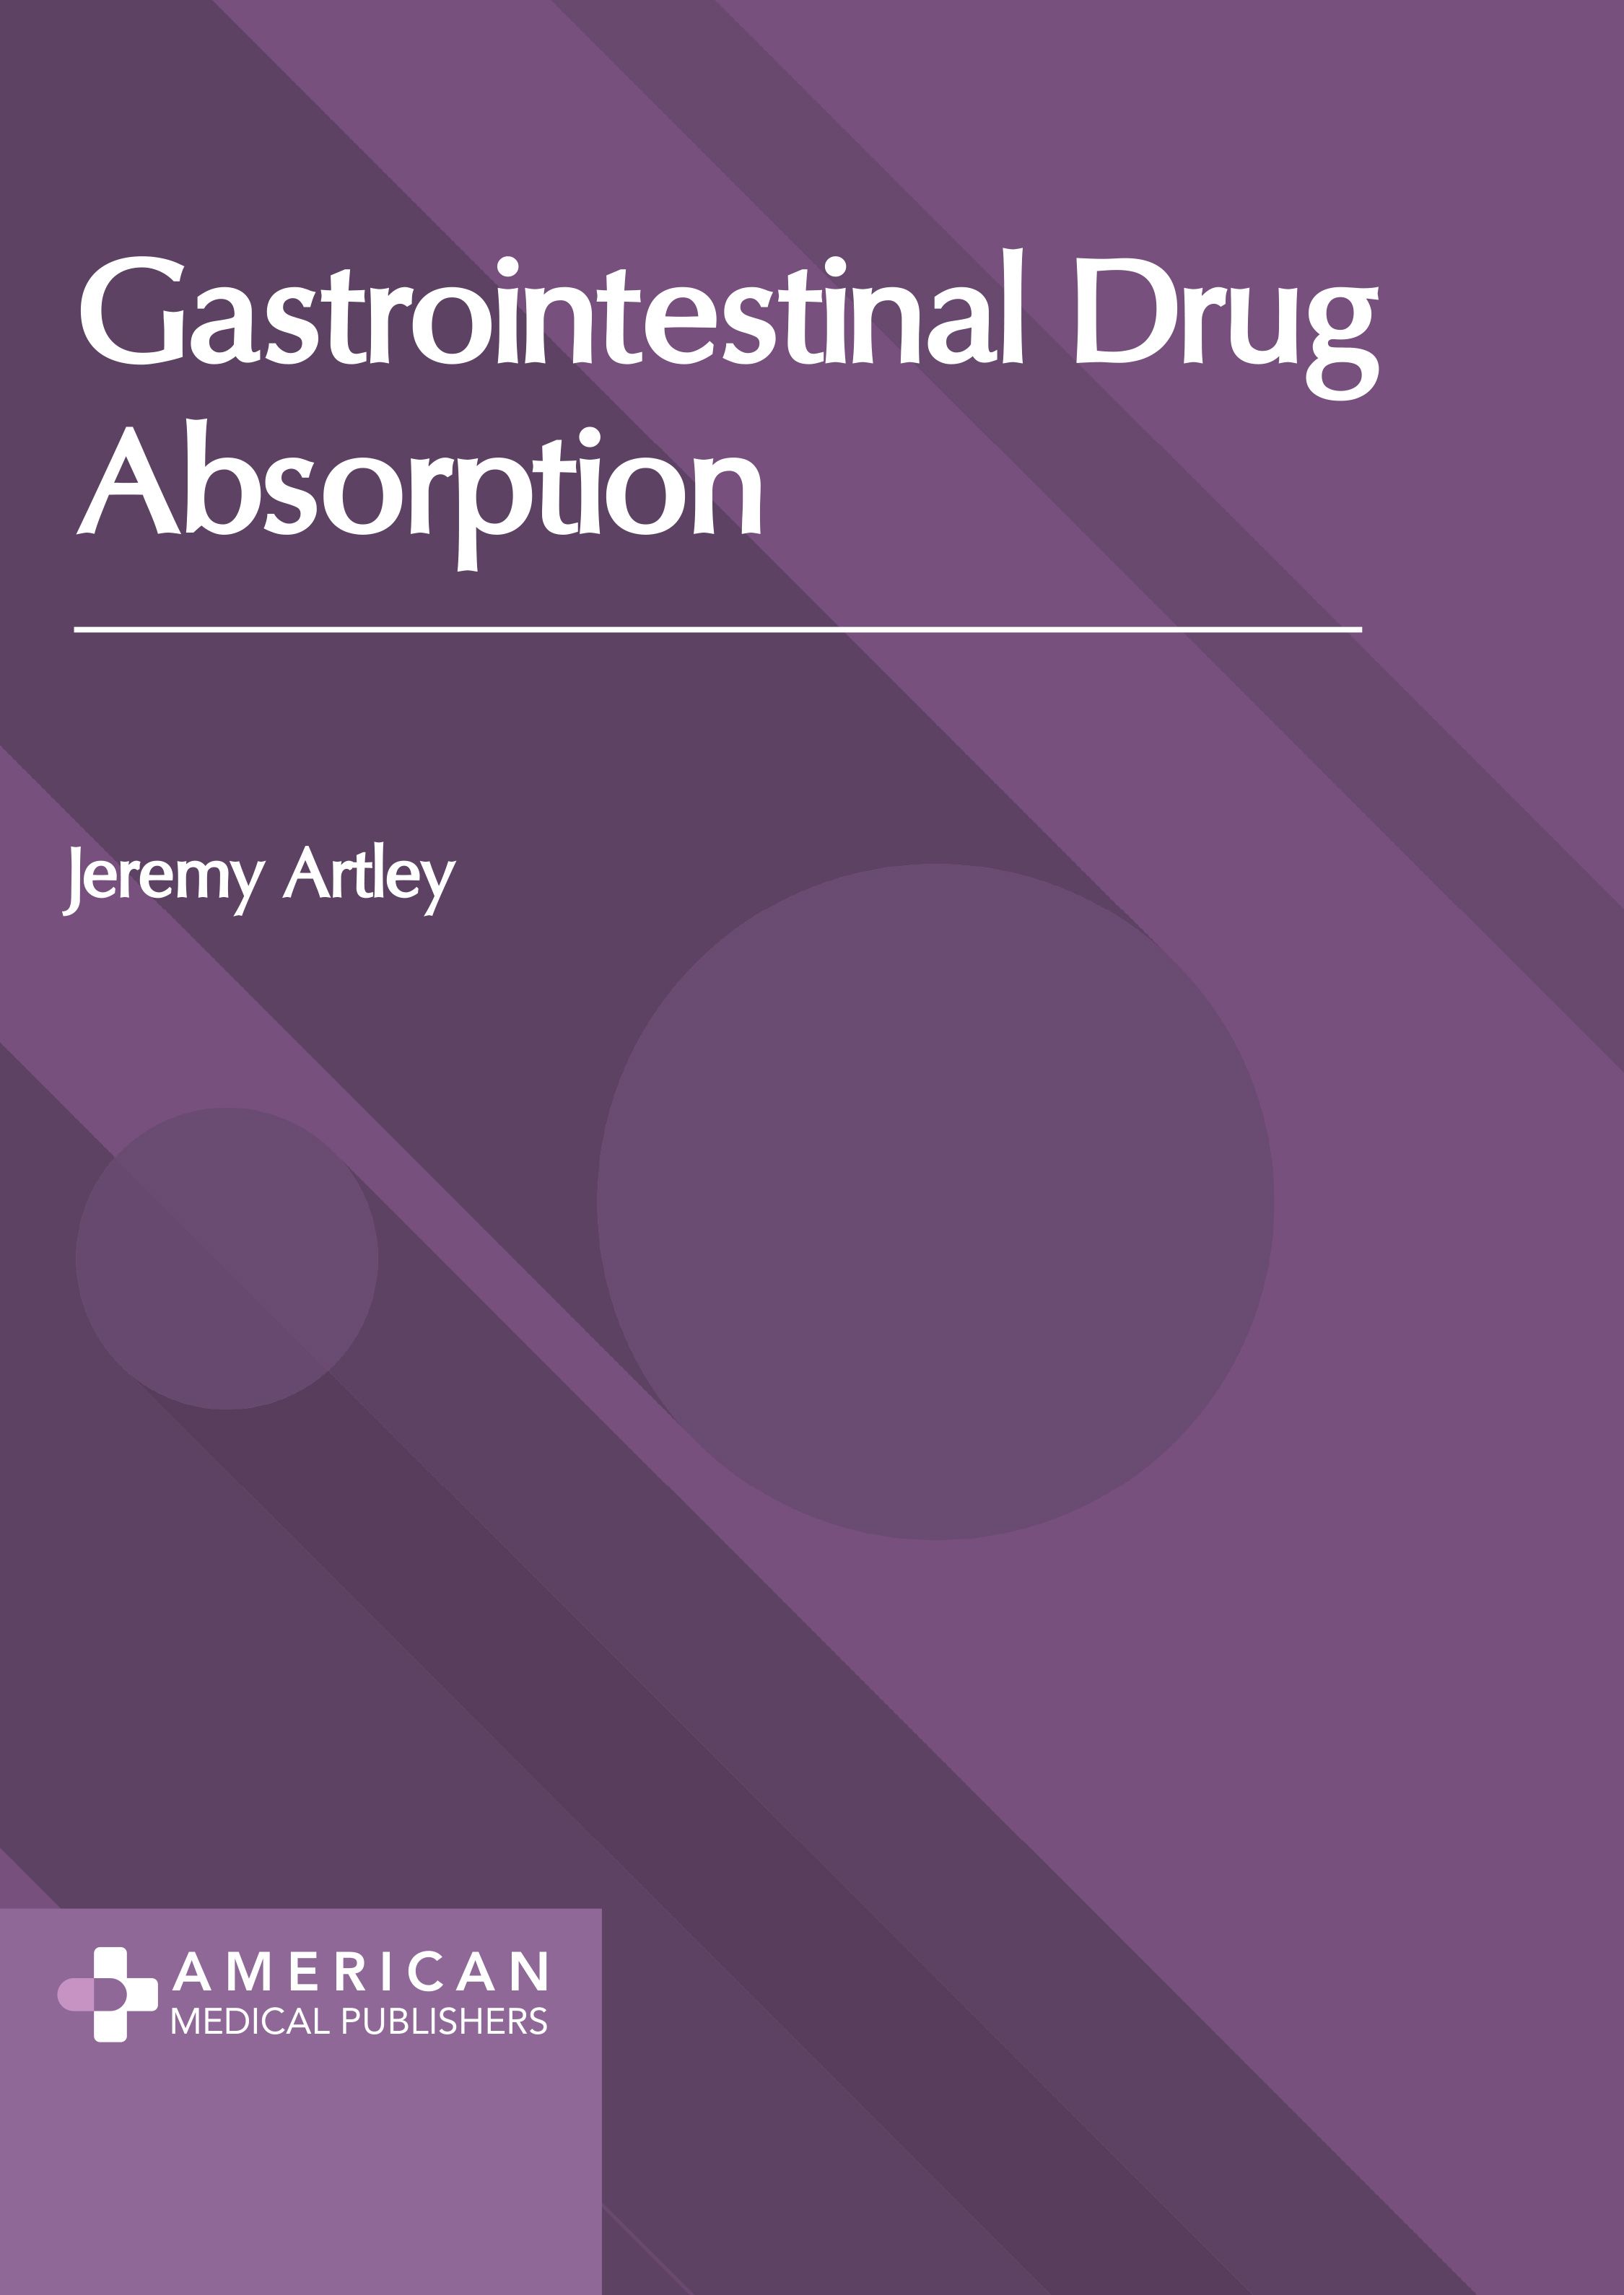 GASTROINTESTINAL DRUG ABSORPTION